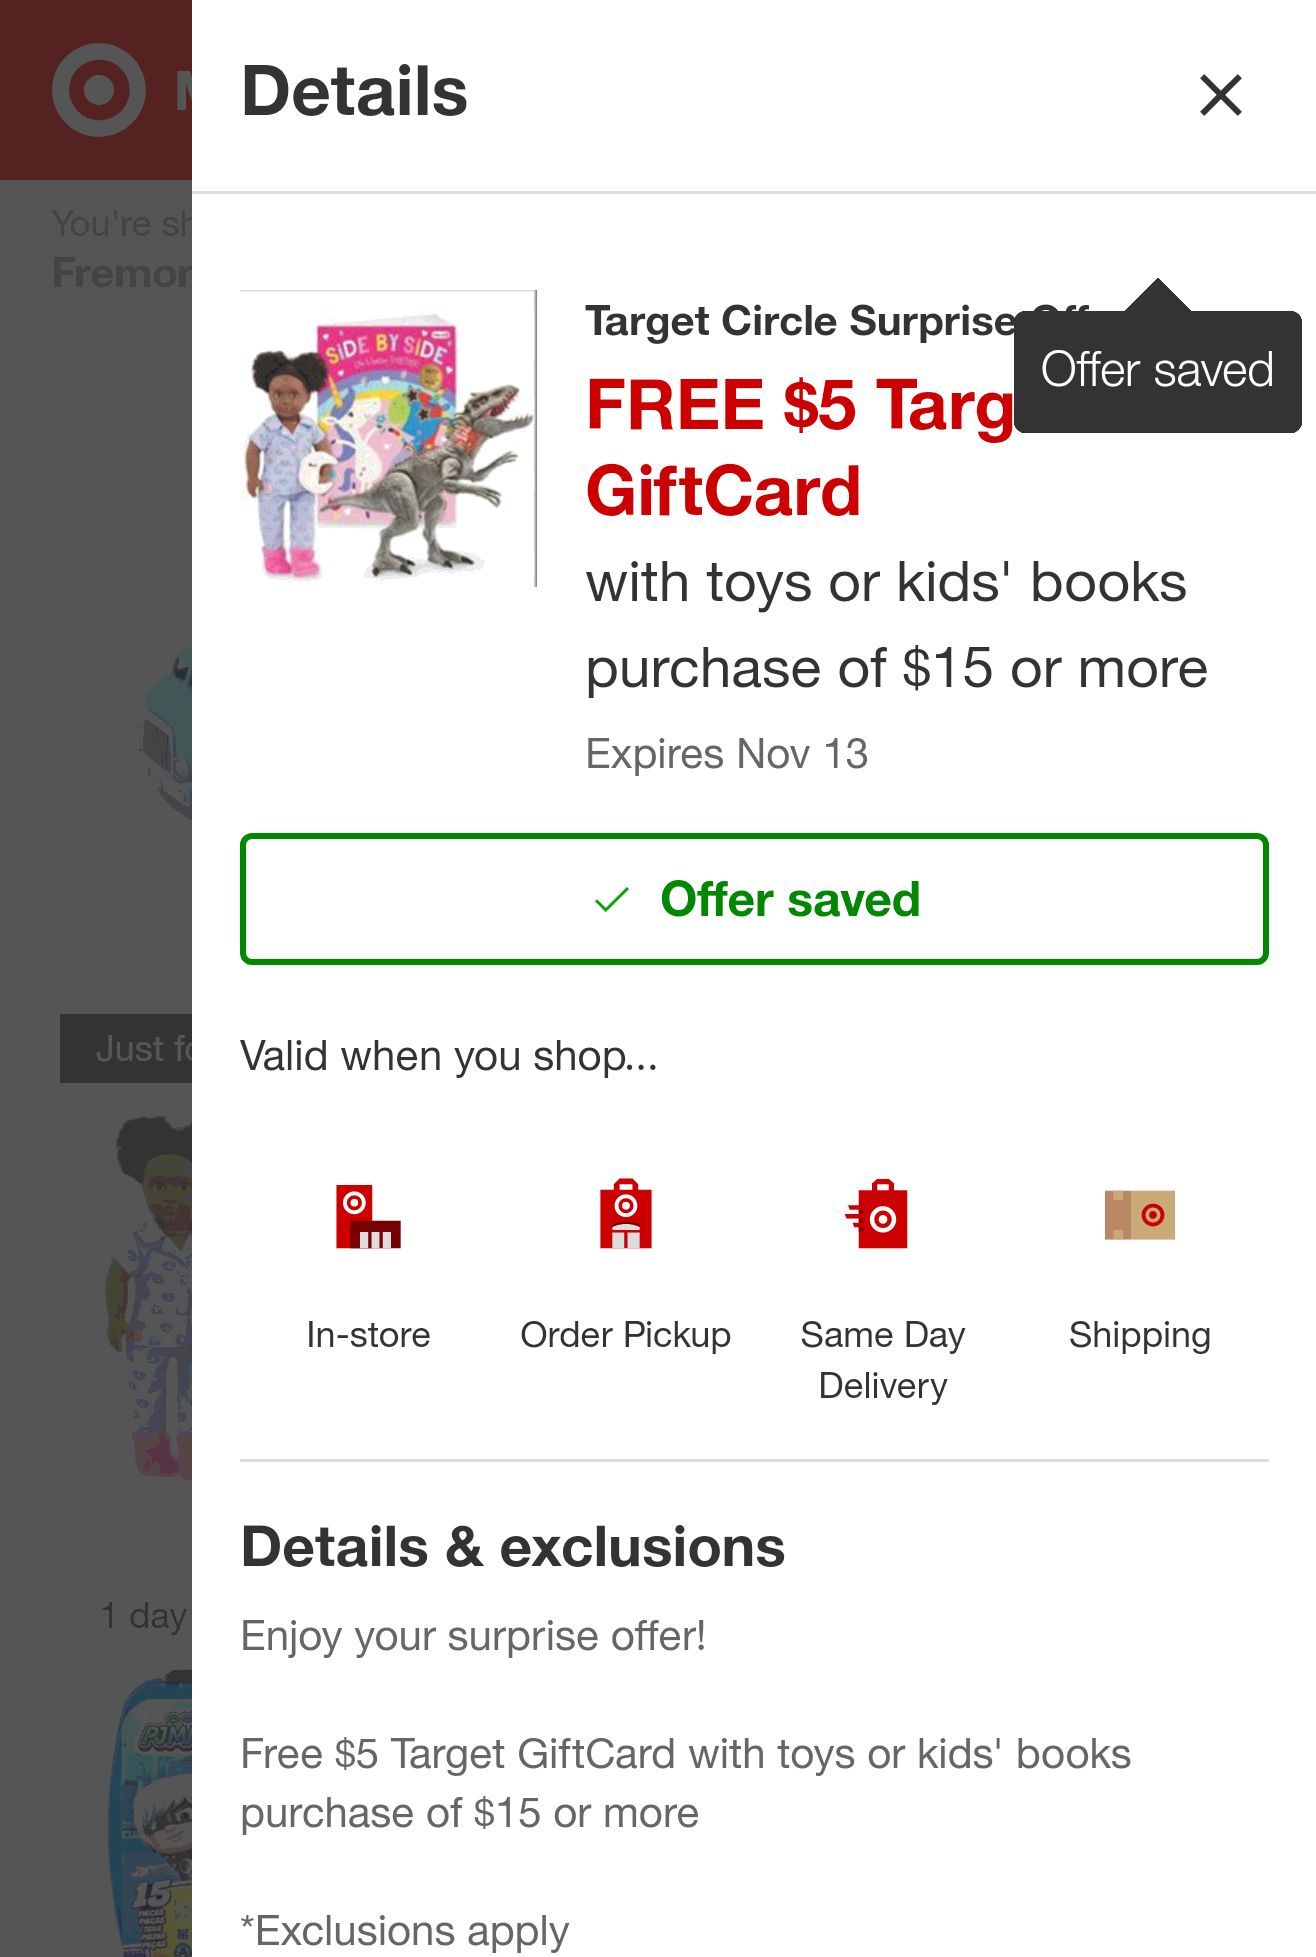 Target Circle™ Offers 玩具或者童书满15送5刀礼卡